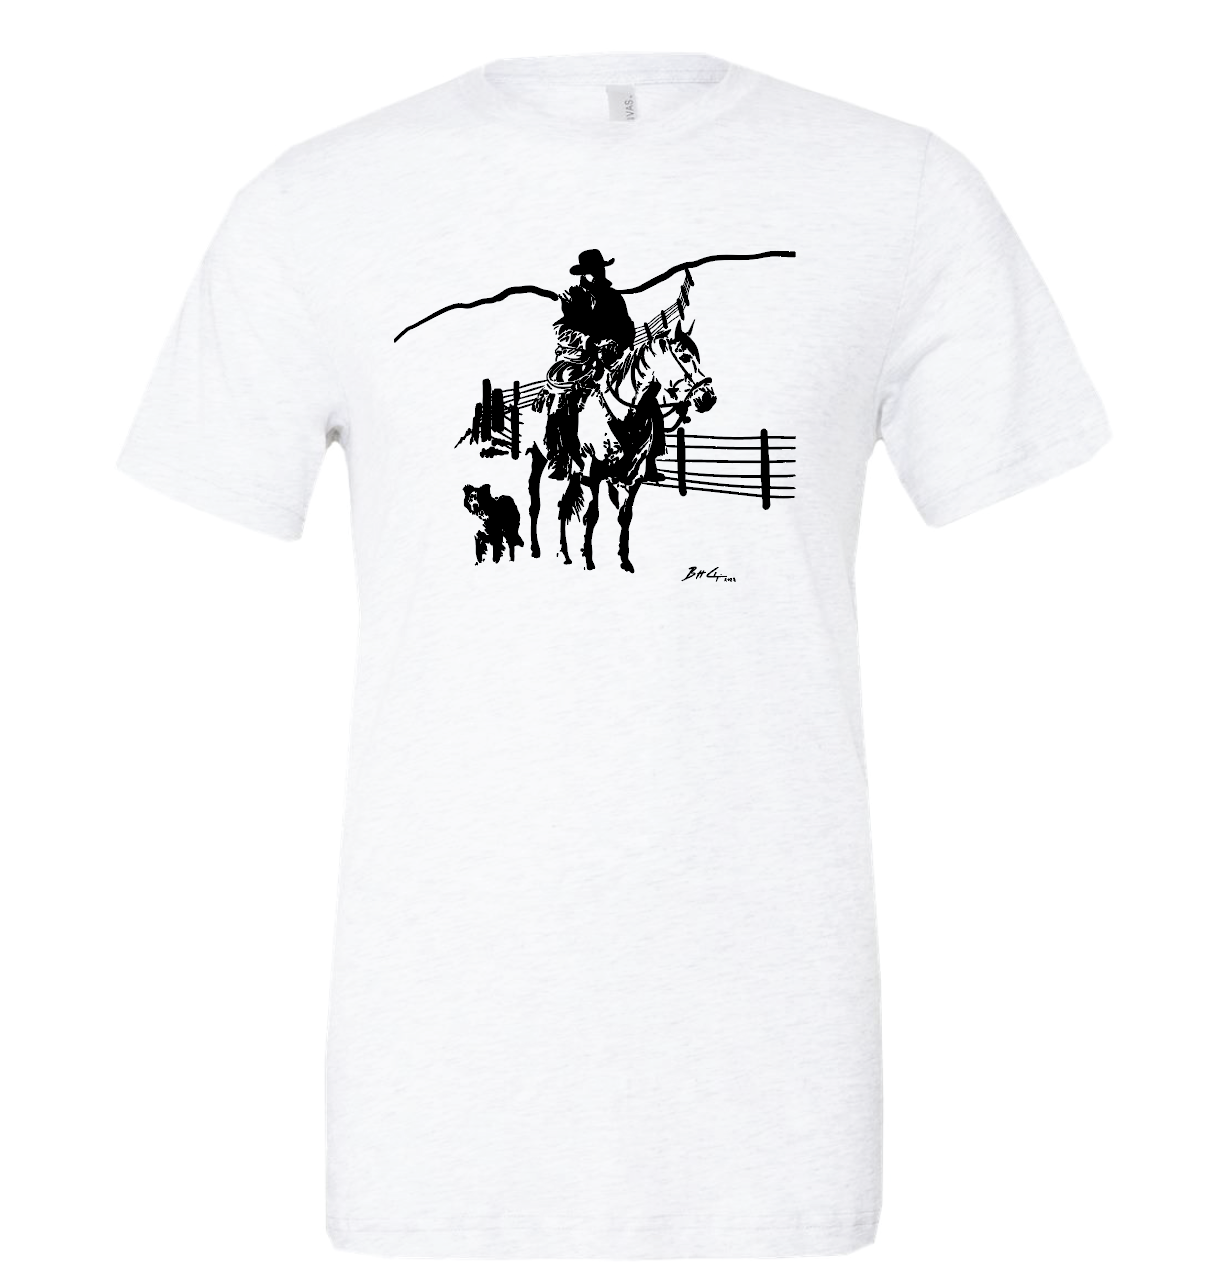 Range Hand Horse Back Cowboy Shirt